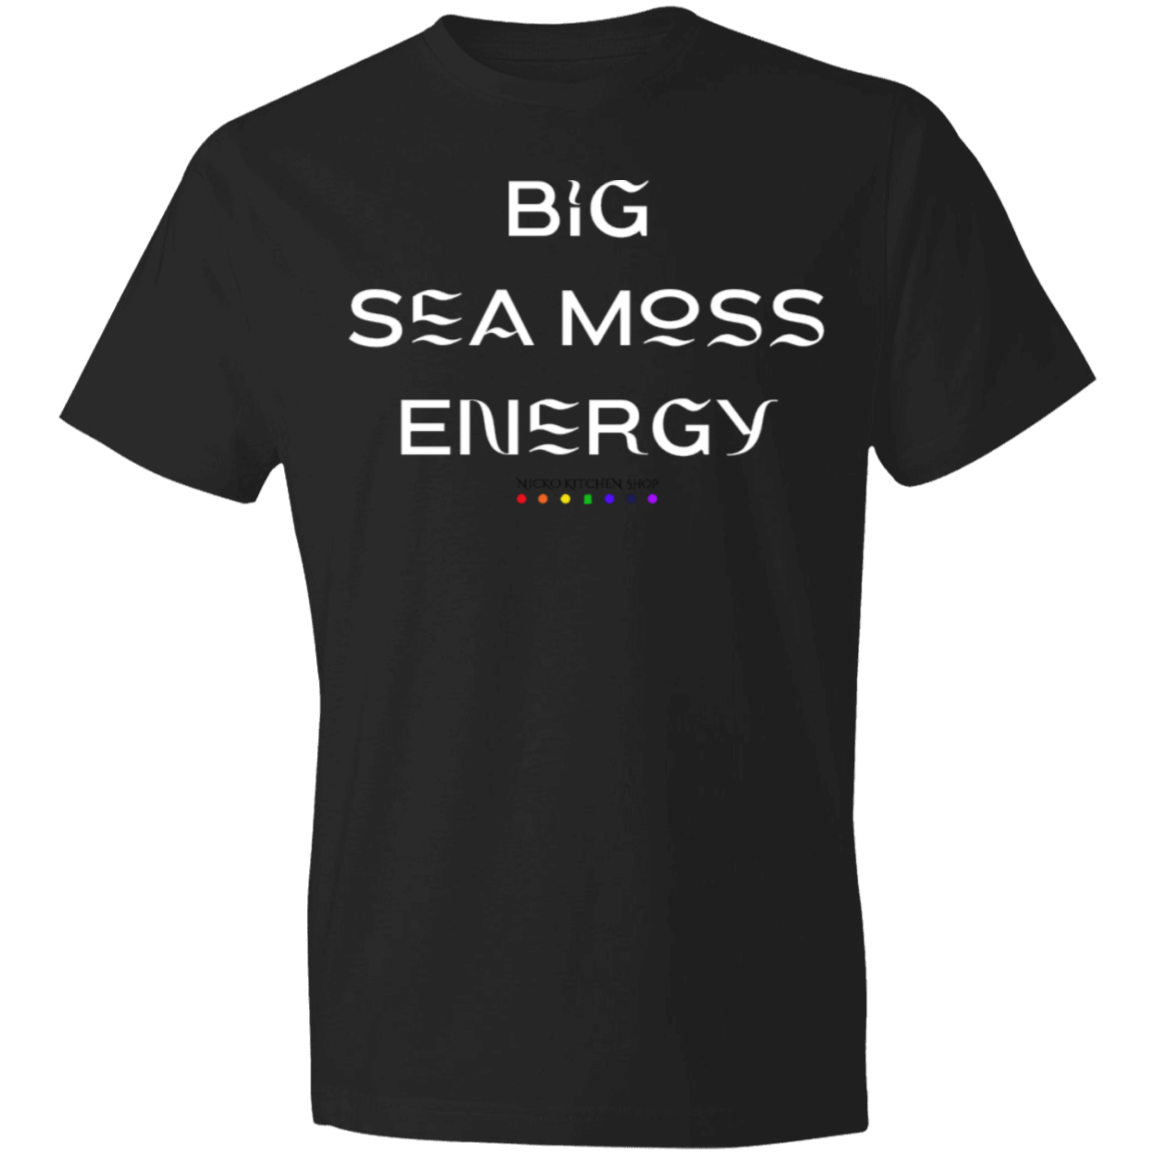 Big Seamoss Wavy T-Shirt - White Text